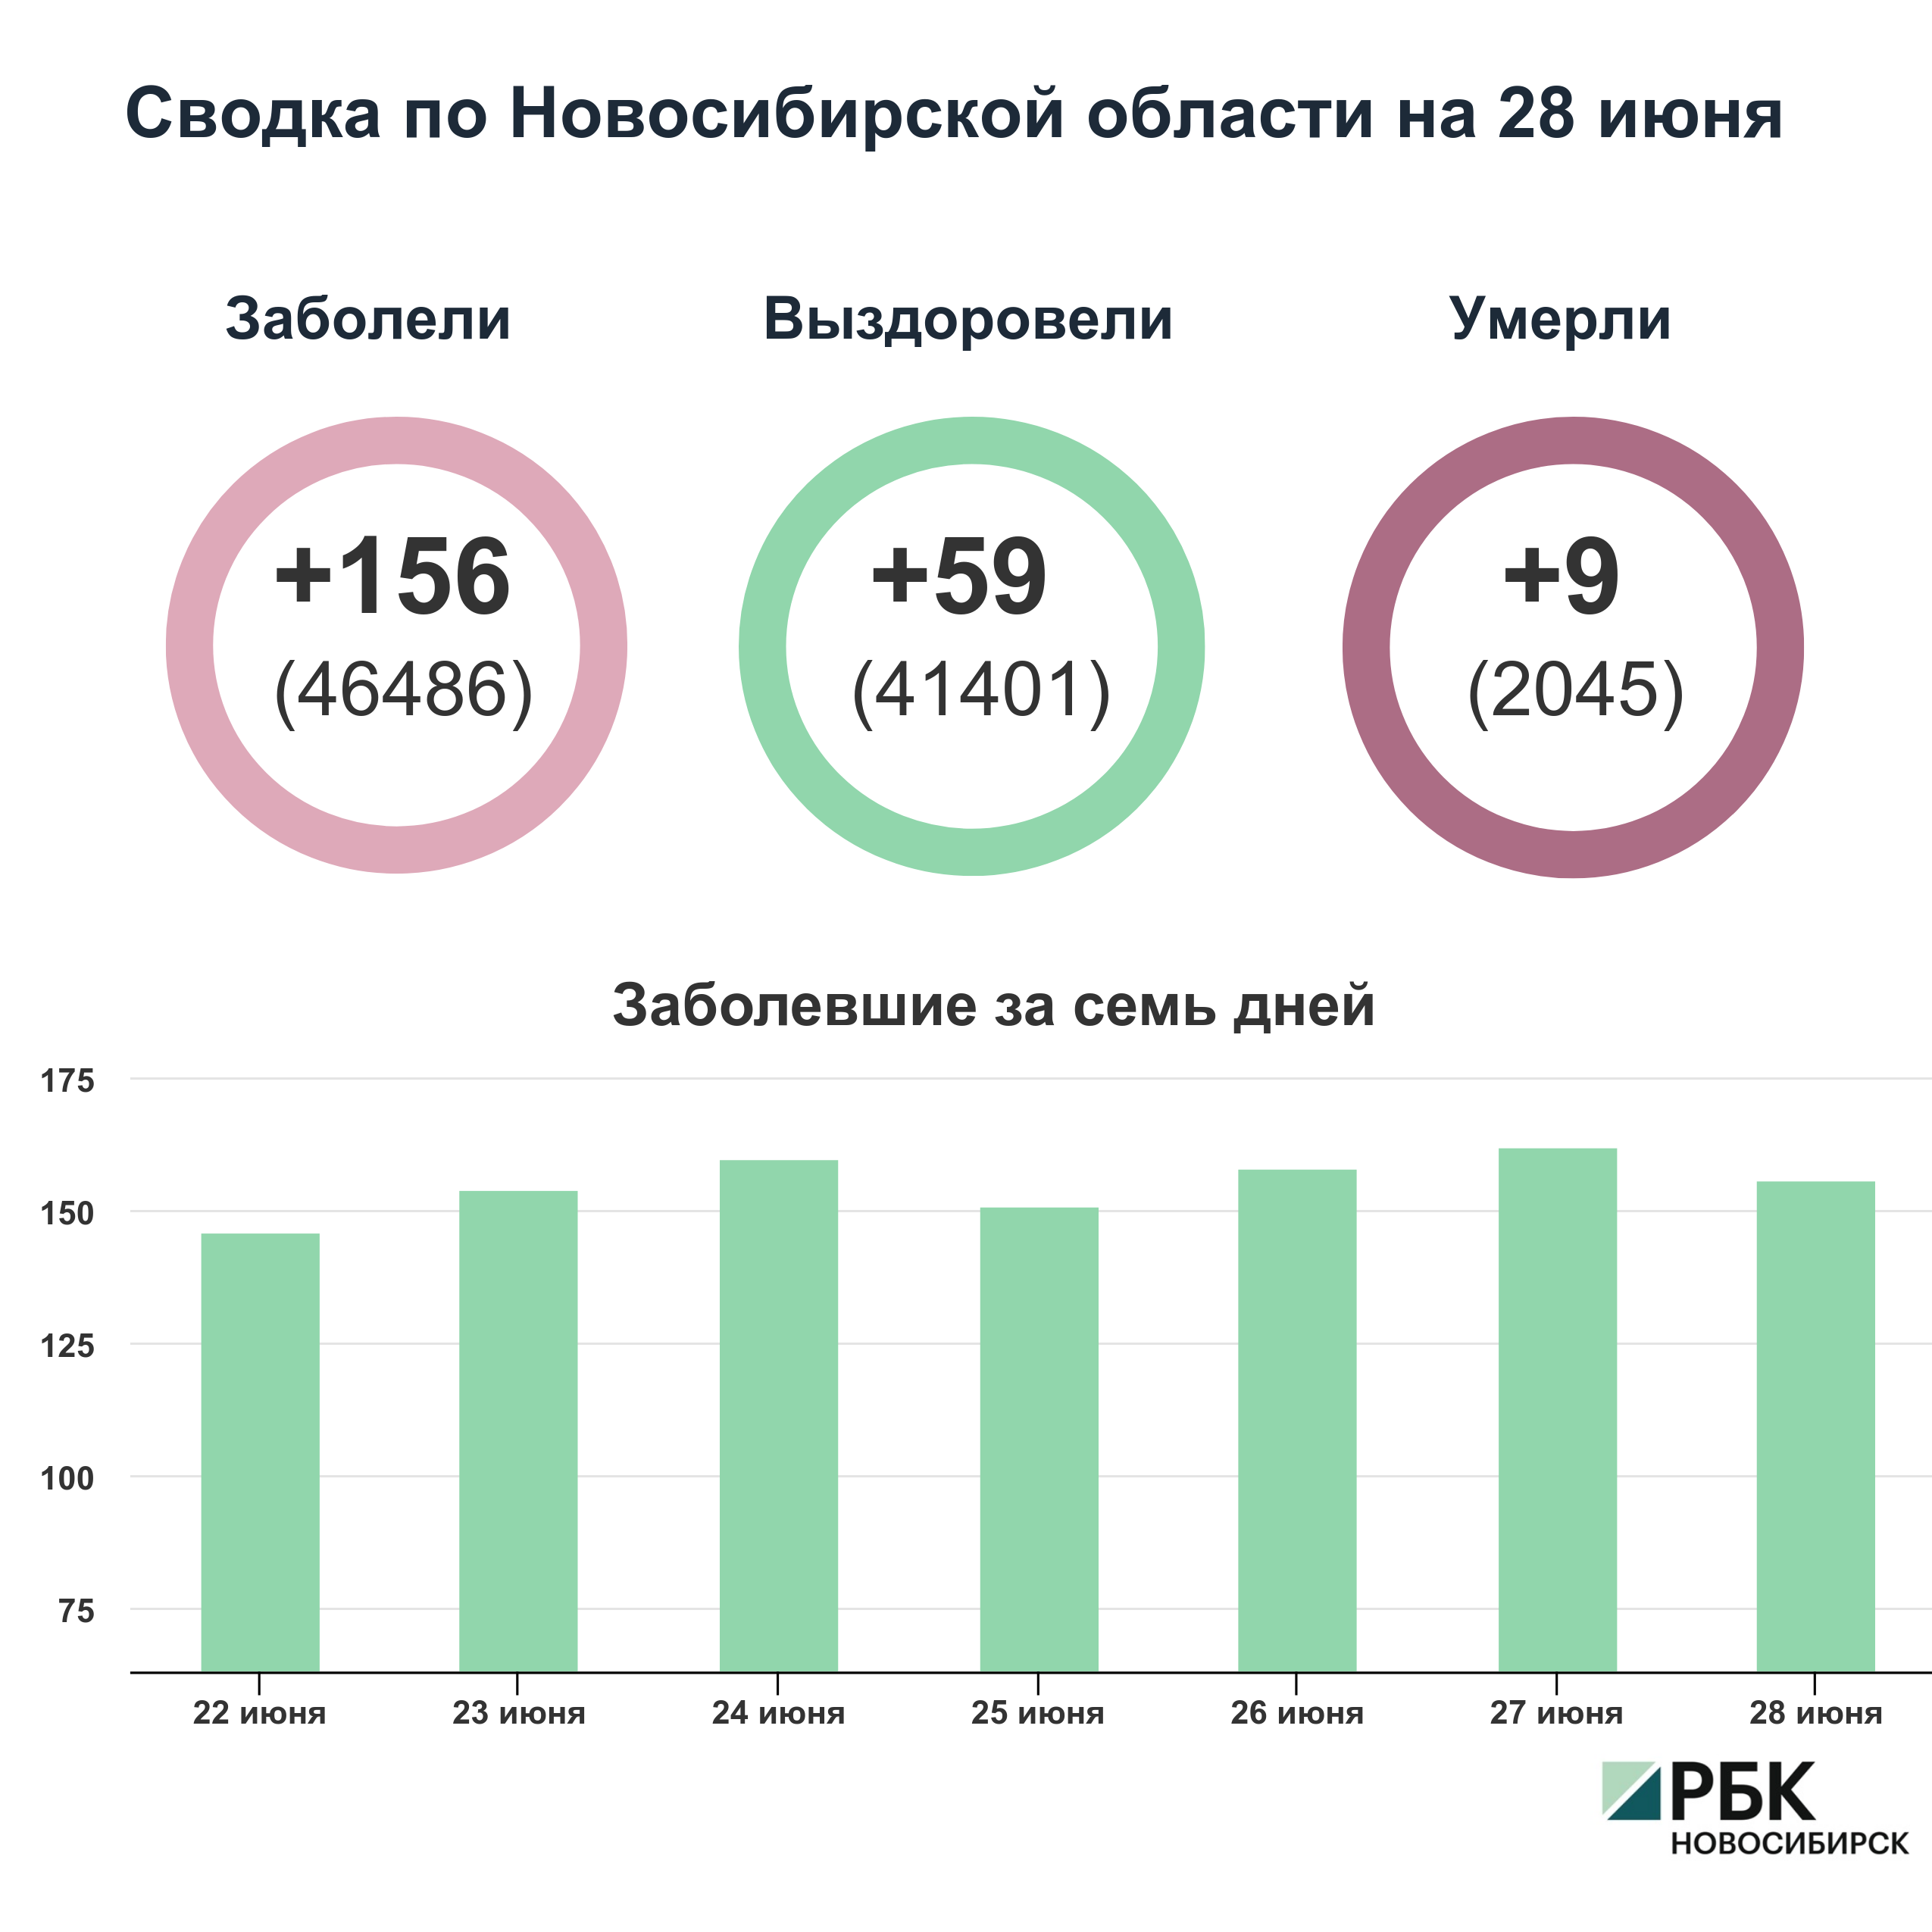 Коронавирус в Новосибирске: сводка на 28 июня